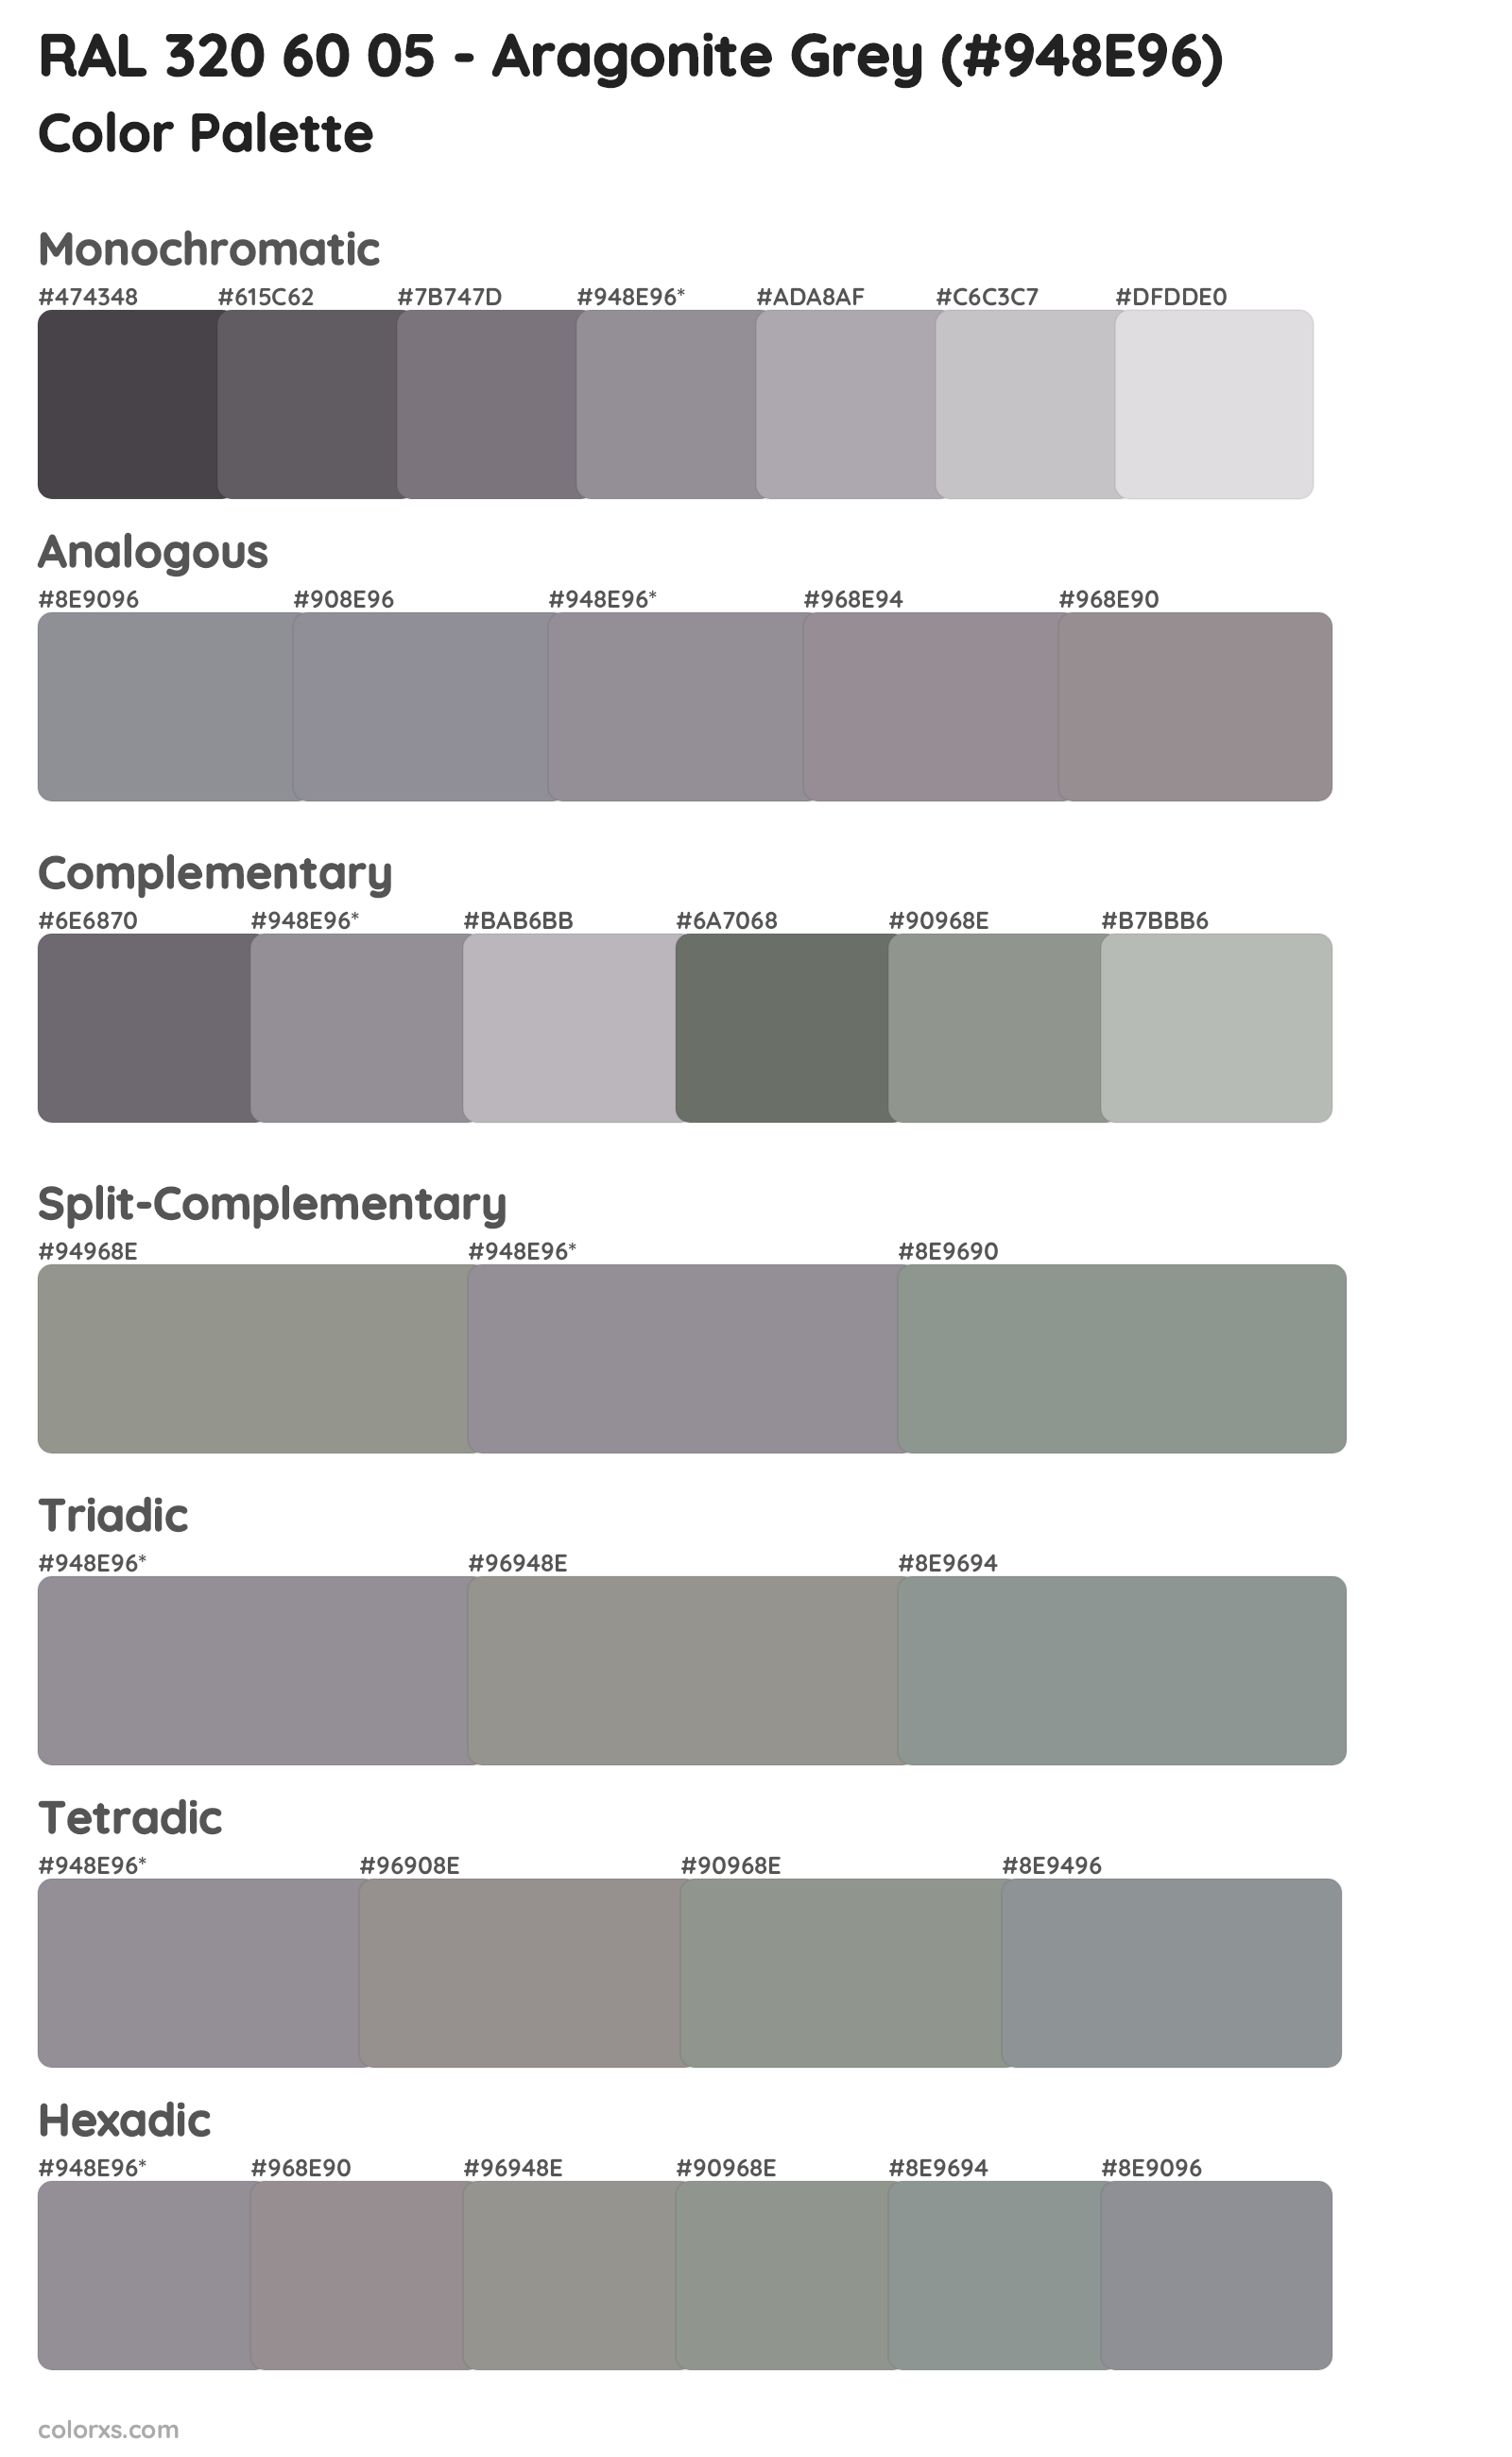 RAL 320 60 05 - Aragonite Grey Color Scheme Palettes